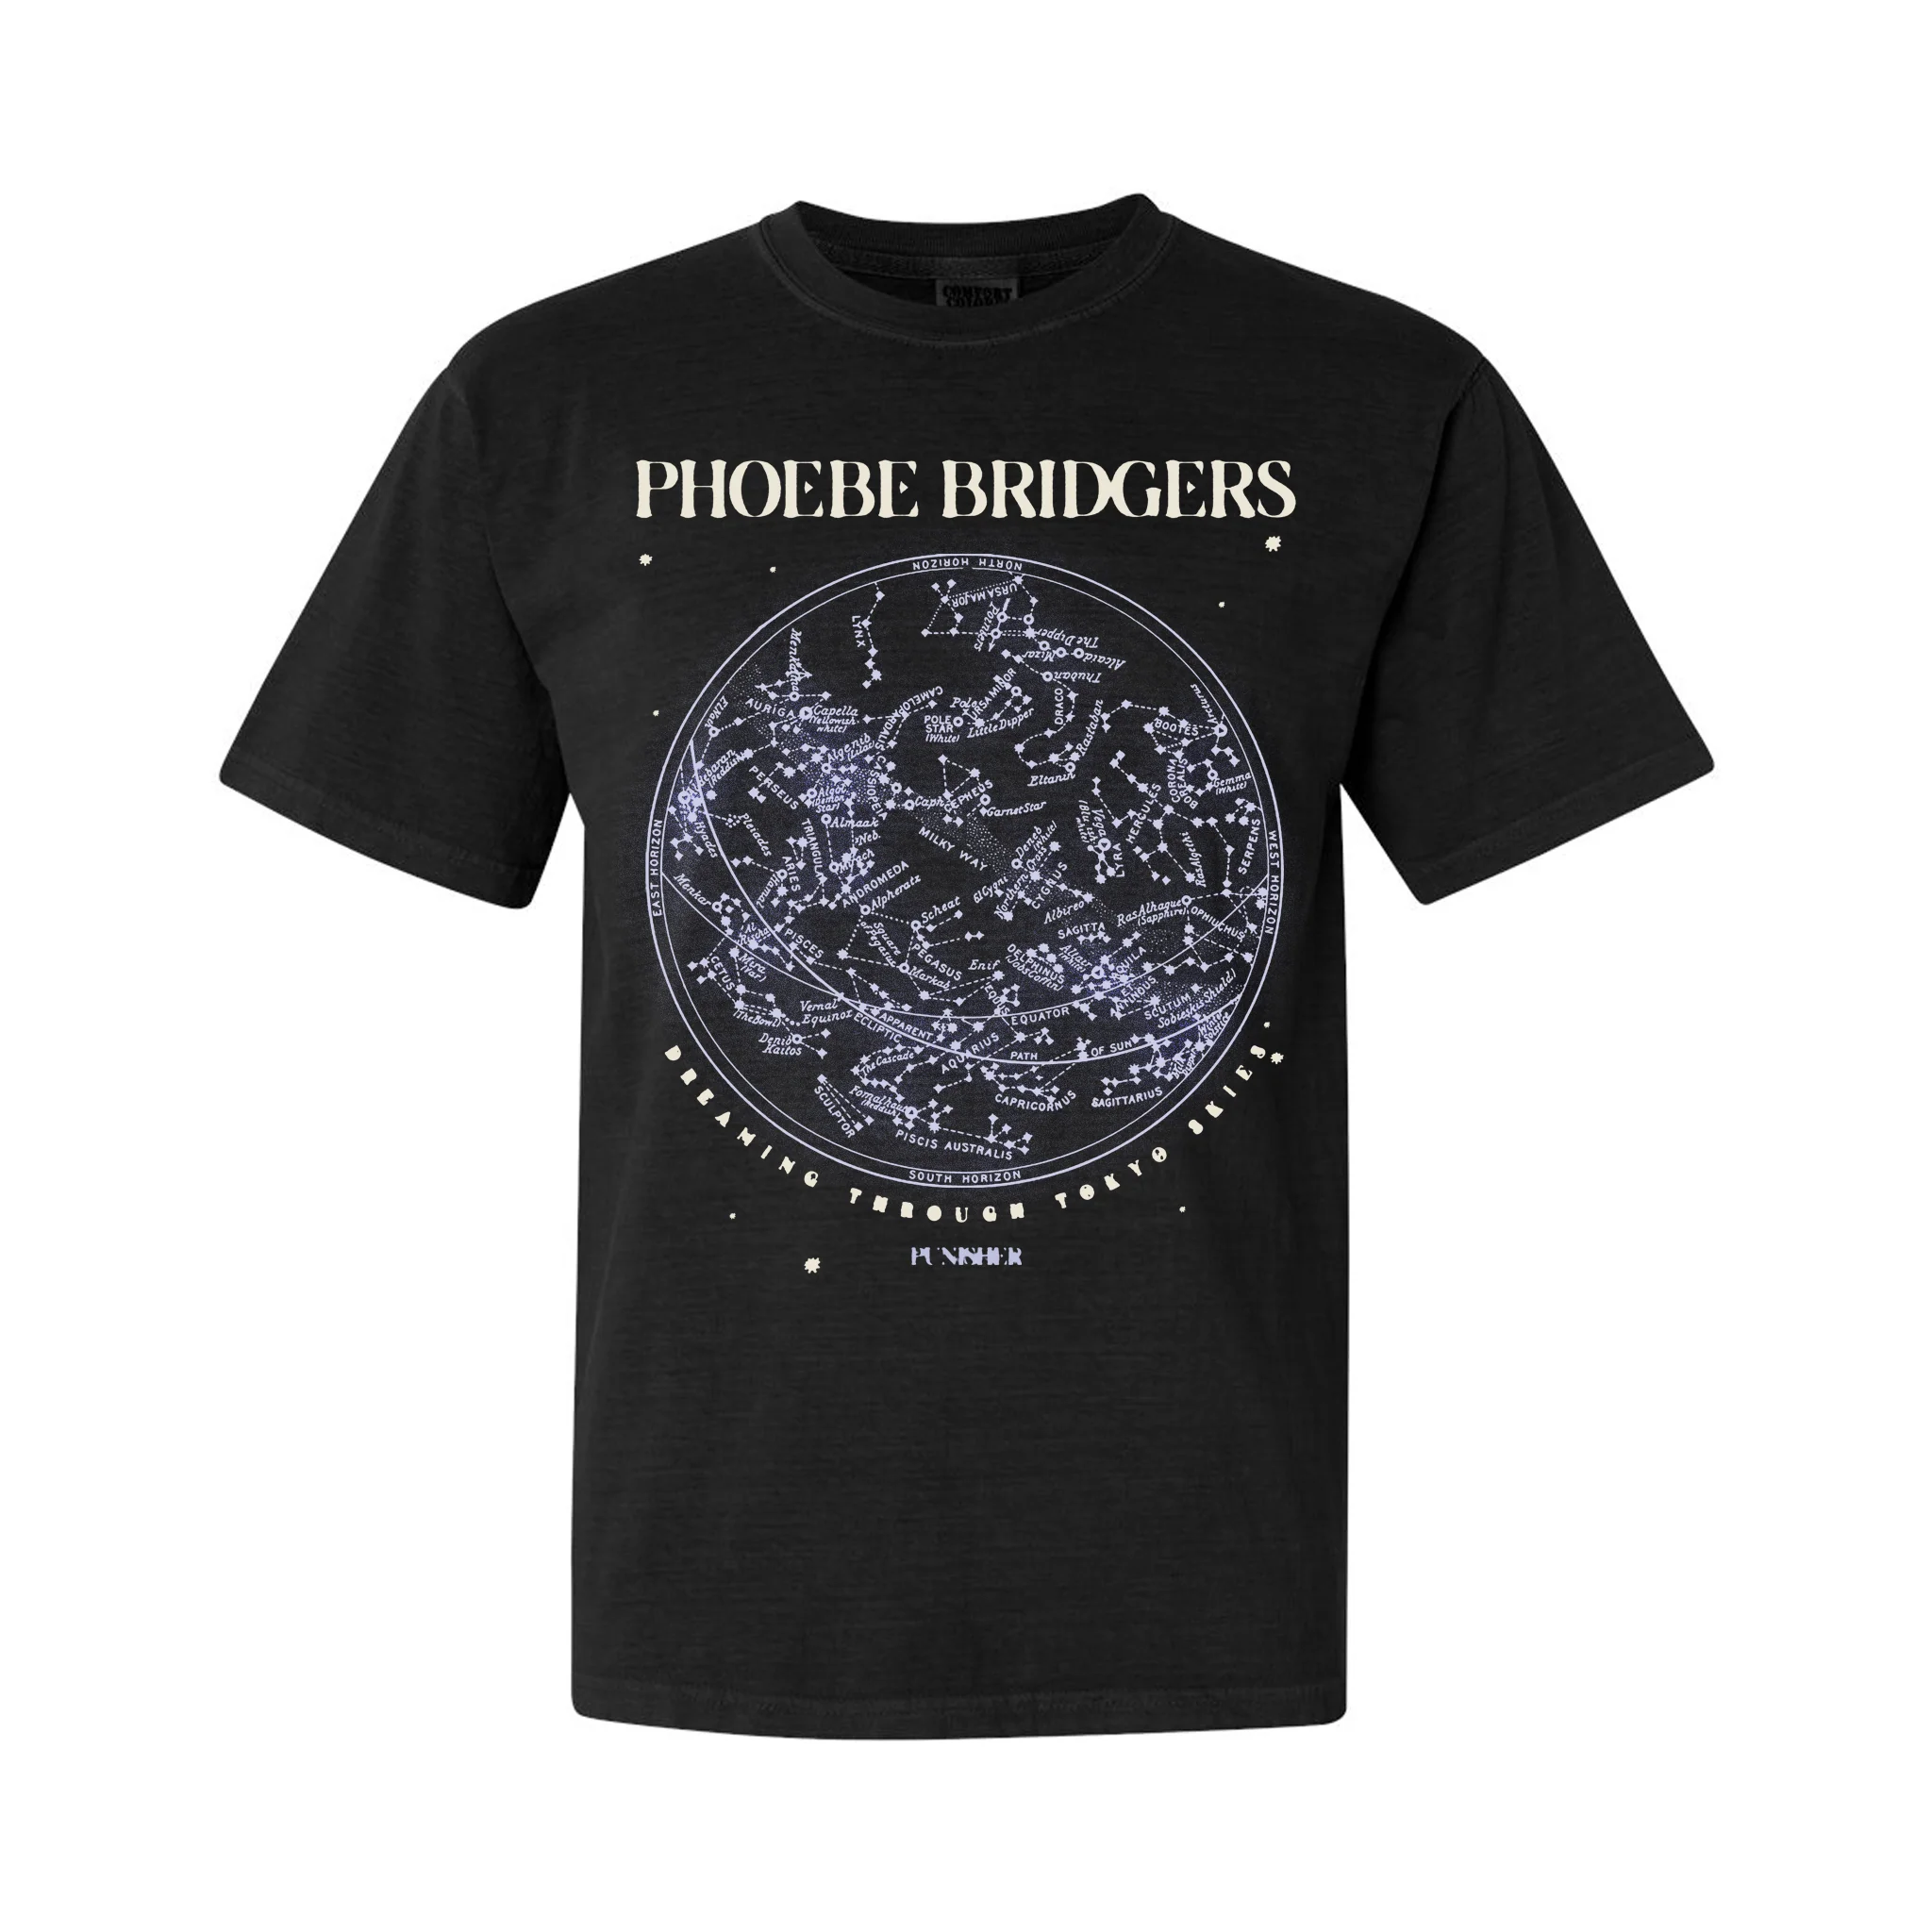 Officially Bridgers: Unveiling the Phoebe Bridgers Official Merch